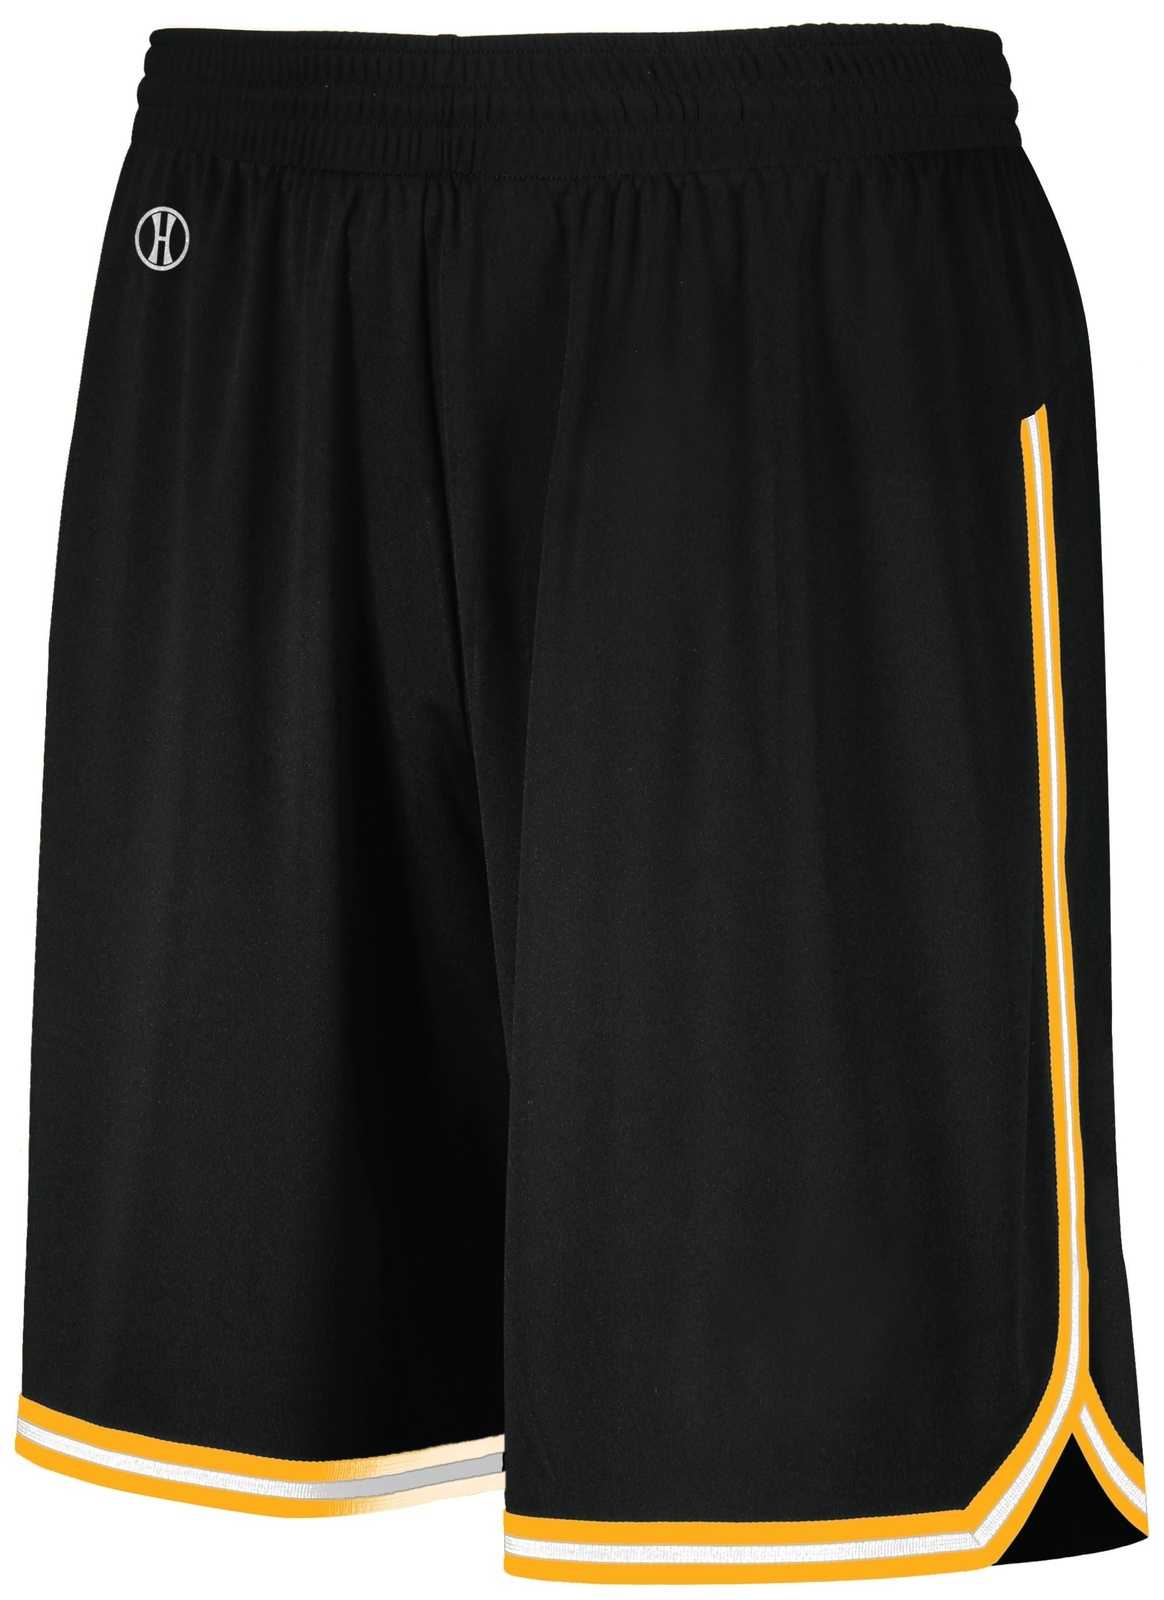 Holloway 224077 Retro Basketball Shorts - Black Light Gold White - HIT a Double